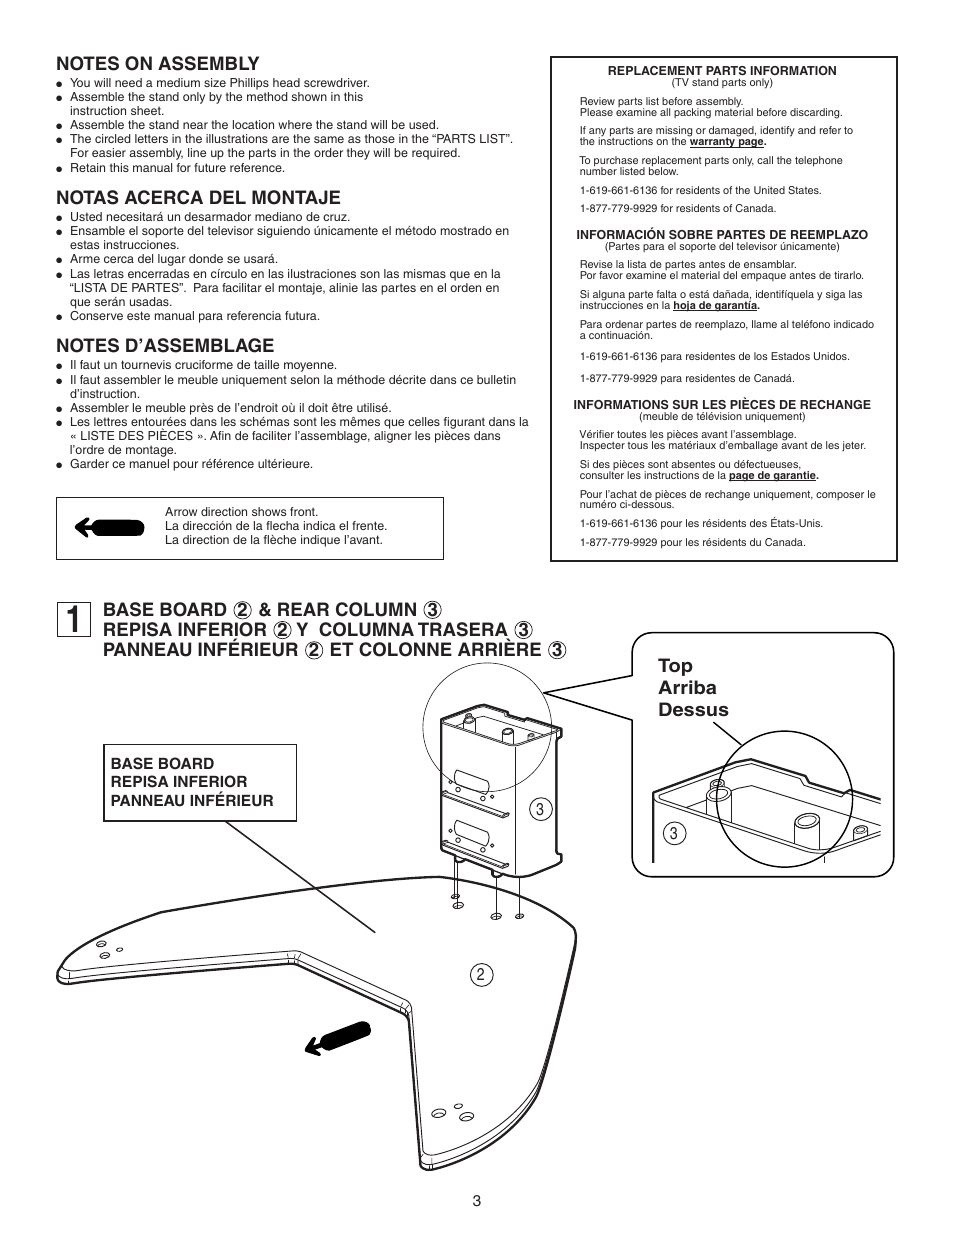 Notas acerca del montaje, Base board repisa inferior panneau inférieur | Sony SU-27HX1 Manuel d'utilisation | Page 3 / 16